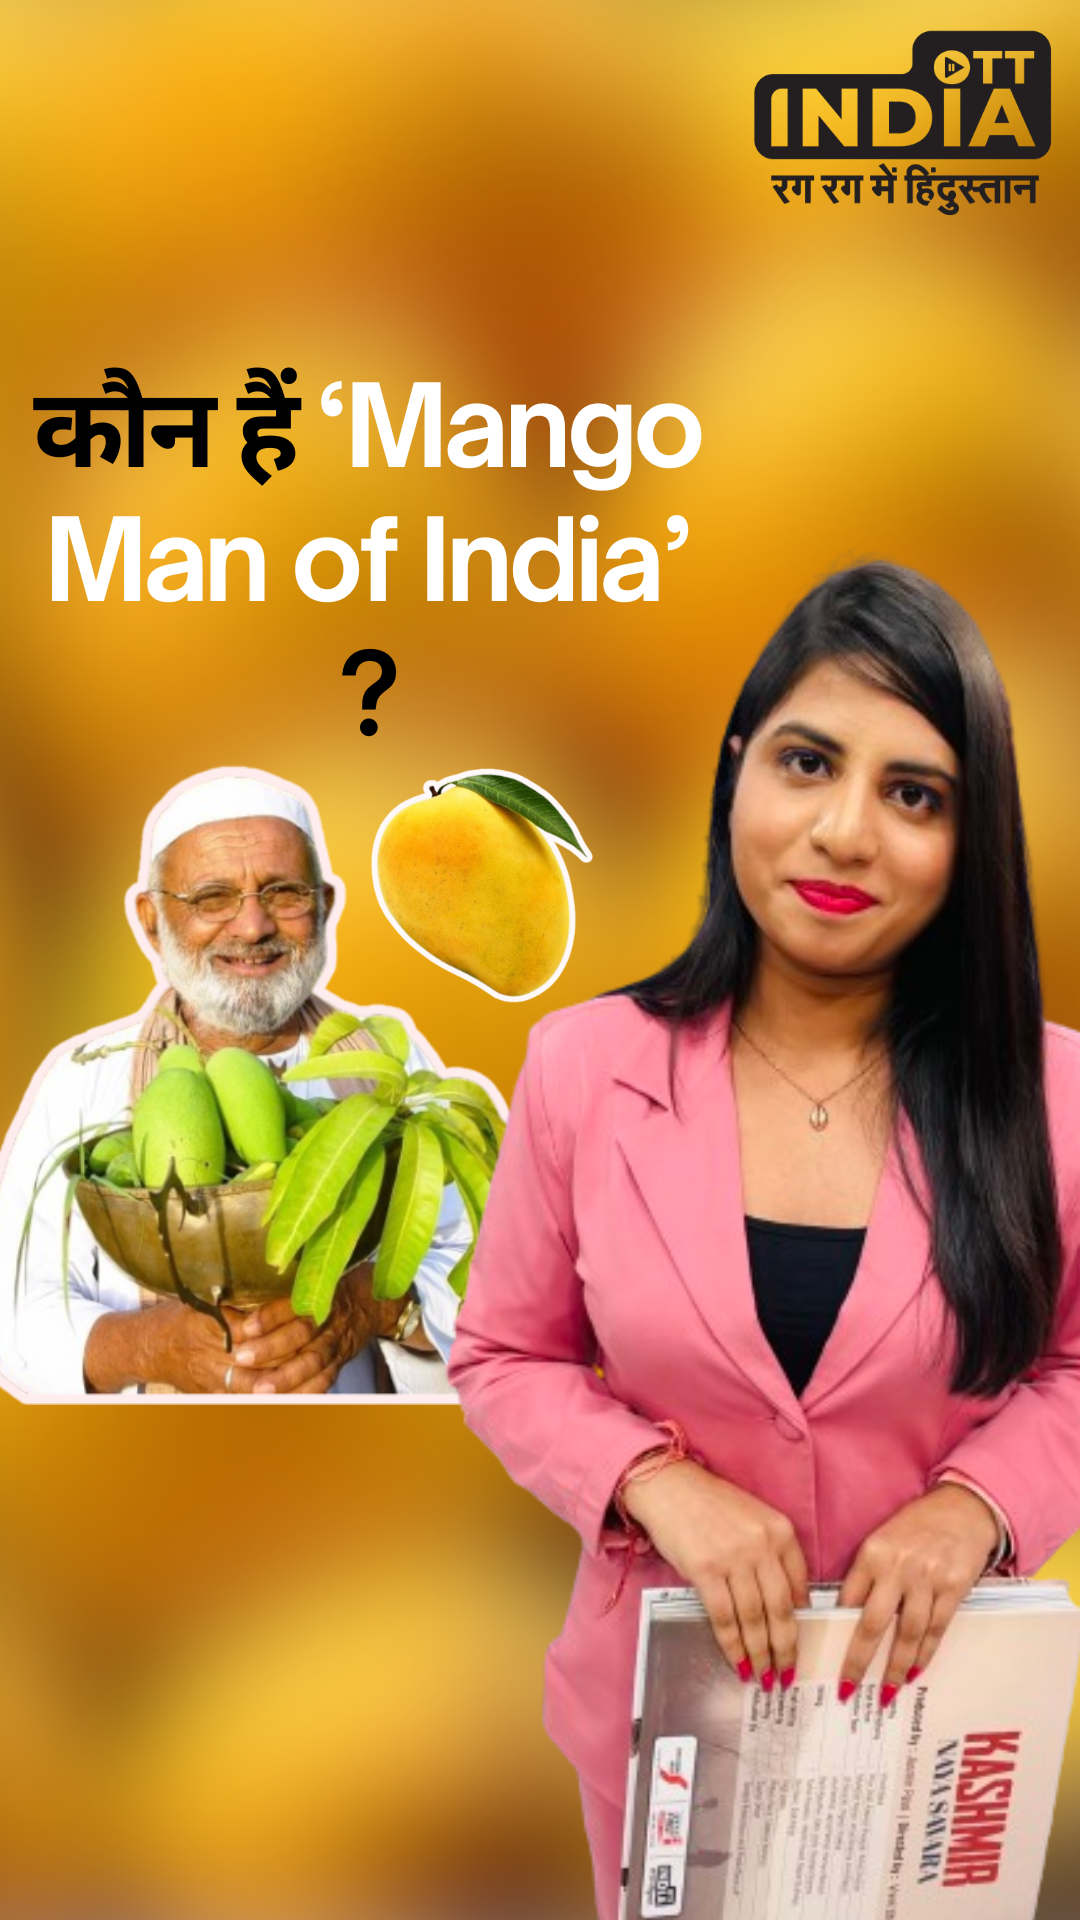 This is Mango Man of India, Sushmita Sen, Narendra Modi and Sachin Tendulkar brought mangoes